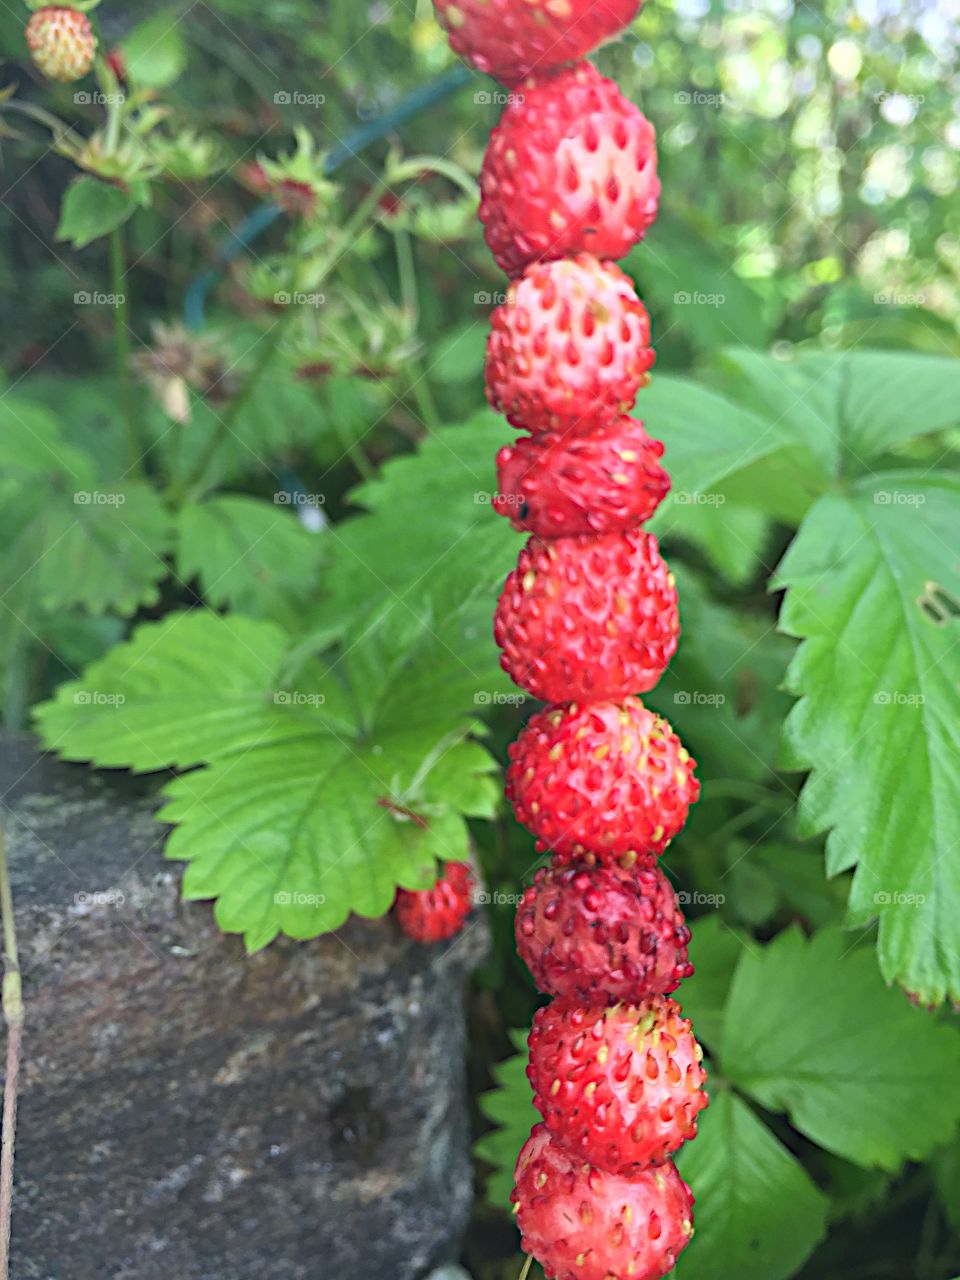 Wild strawberries on a straw